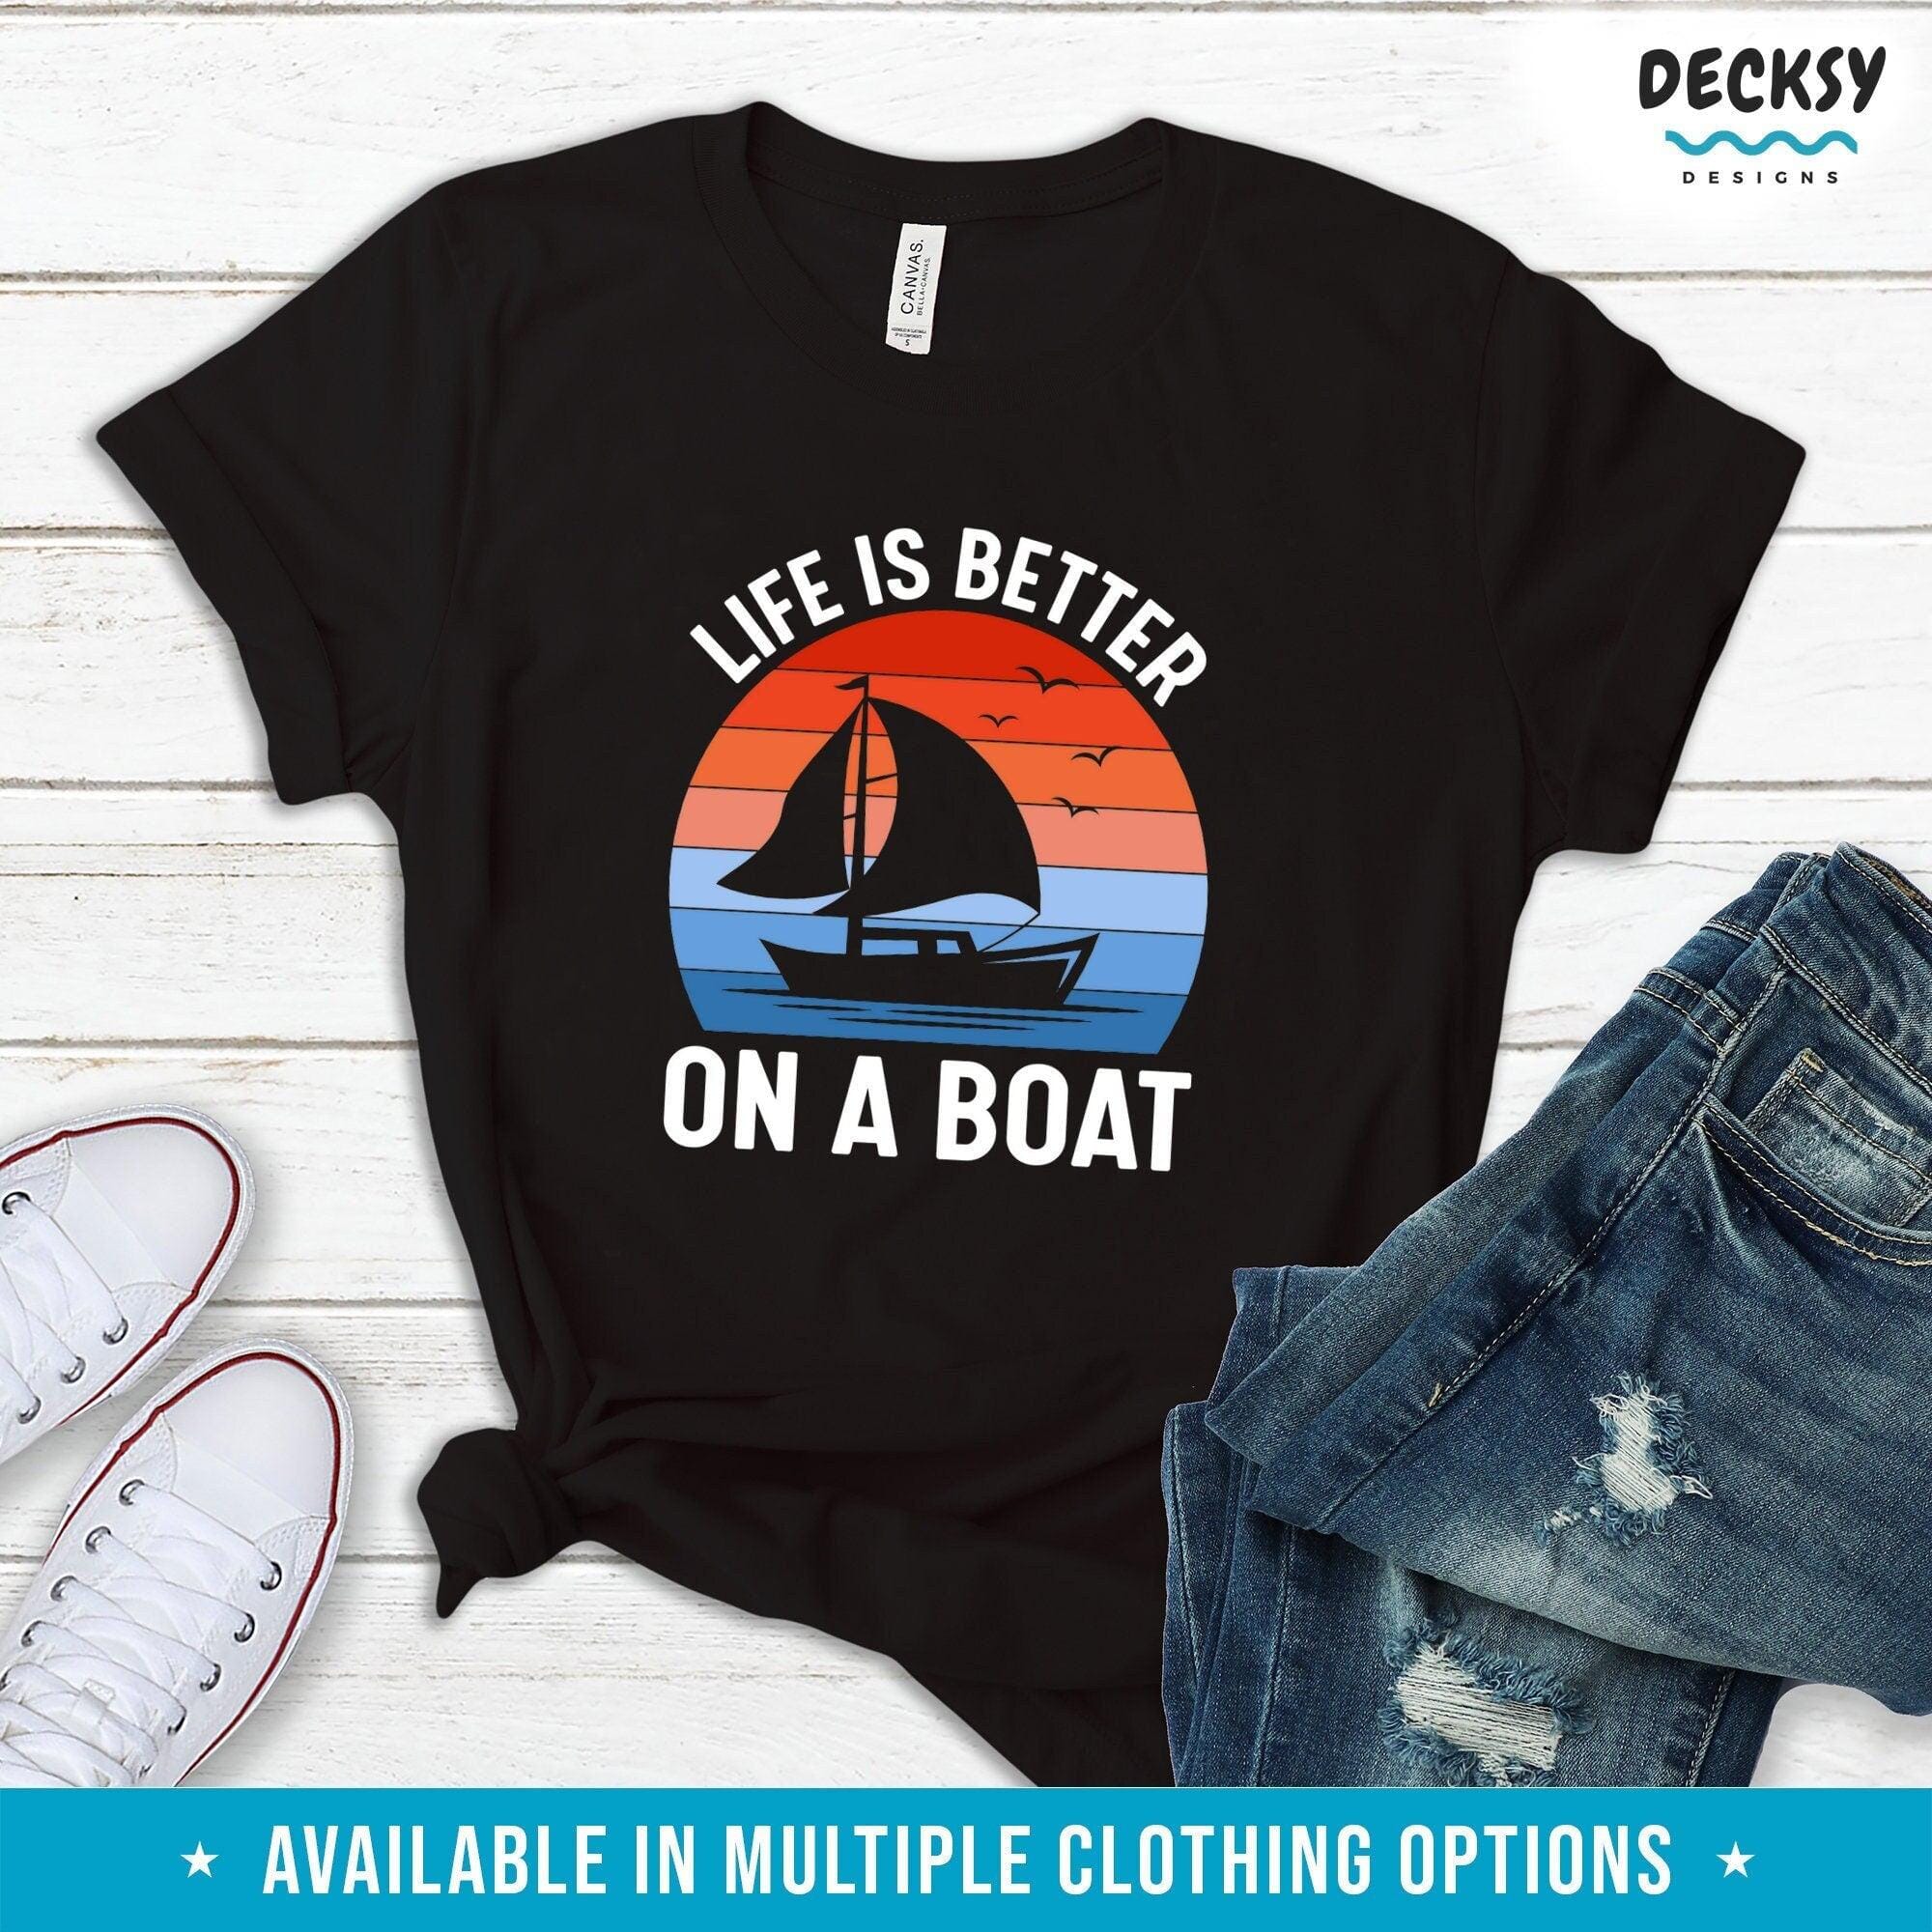 Sailing Lover Shirt, Sail Boat Gift-Clothing:Gender-Neutral Adult Clothing:Tops & Tees:T-shirts:Graphic Tees-DecksyDesigns